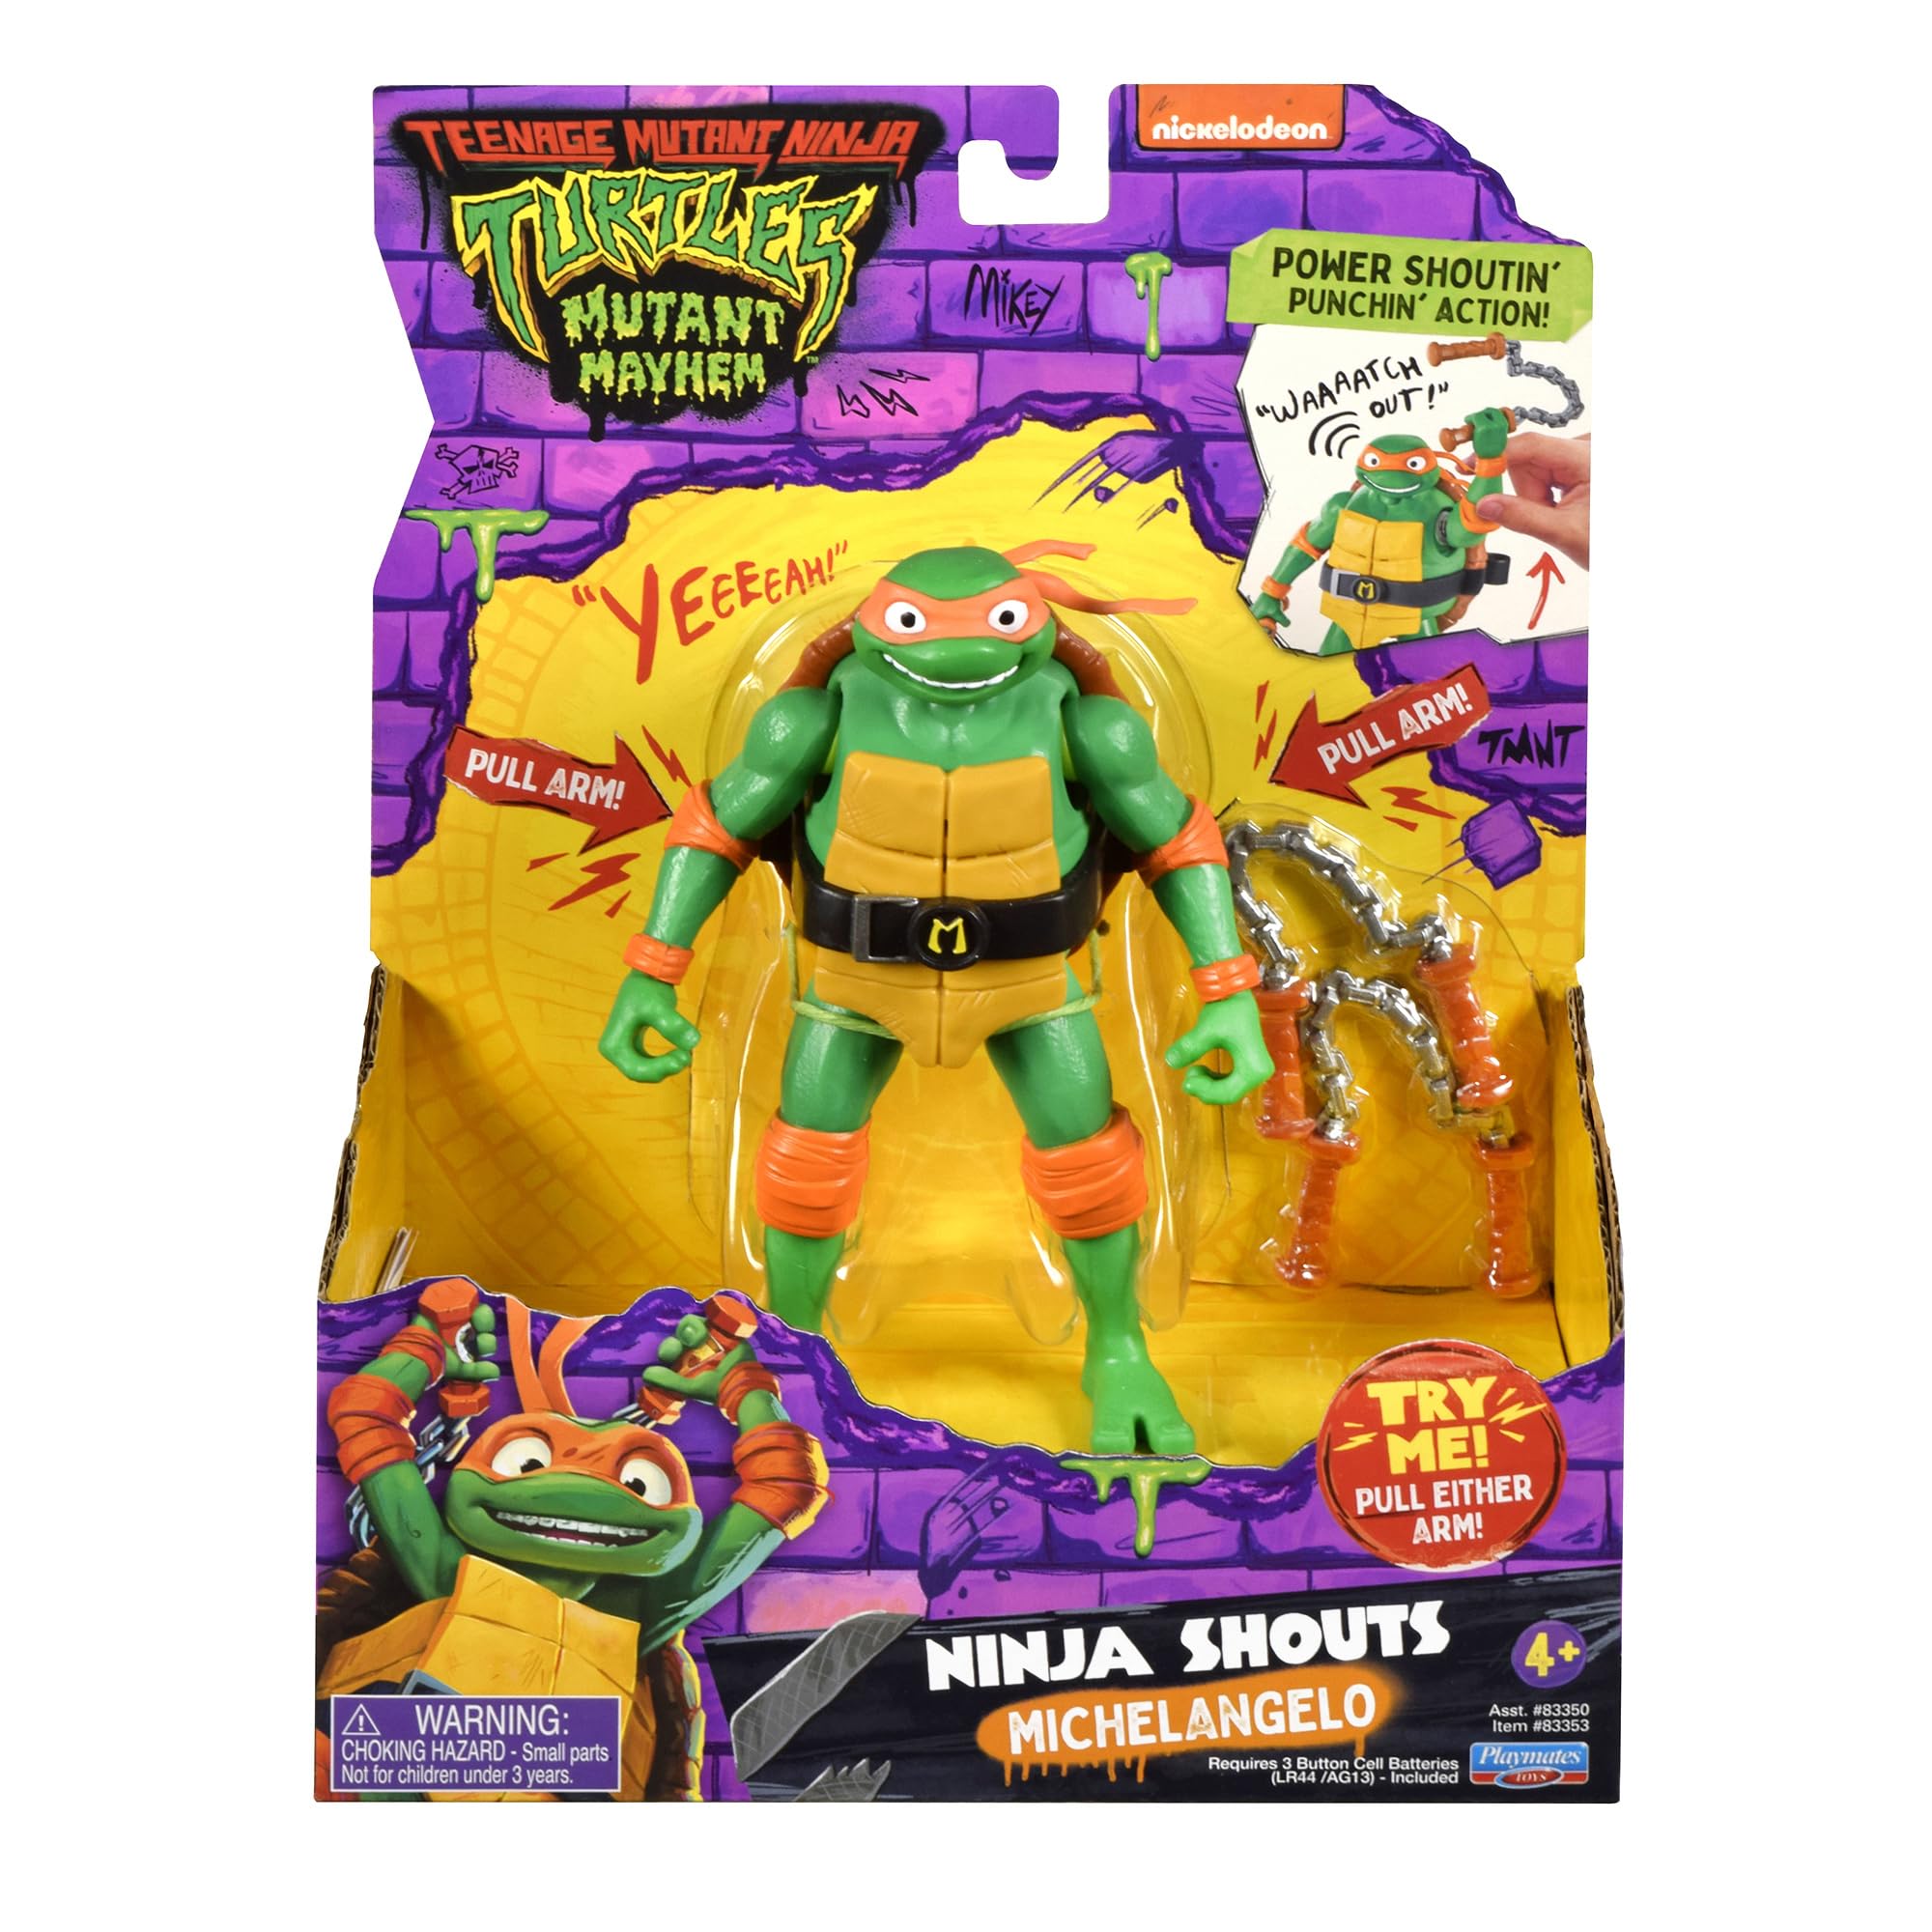 Teenage Mutant Ninja Turtles Mutant Mayhem Action Figures: 5.5” Deluxe Ninja Shouts Michelangelo w/ Sound Effects $4.80 & More + Free Shipping w/ Prime or on $35+